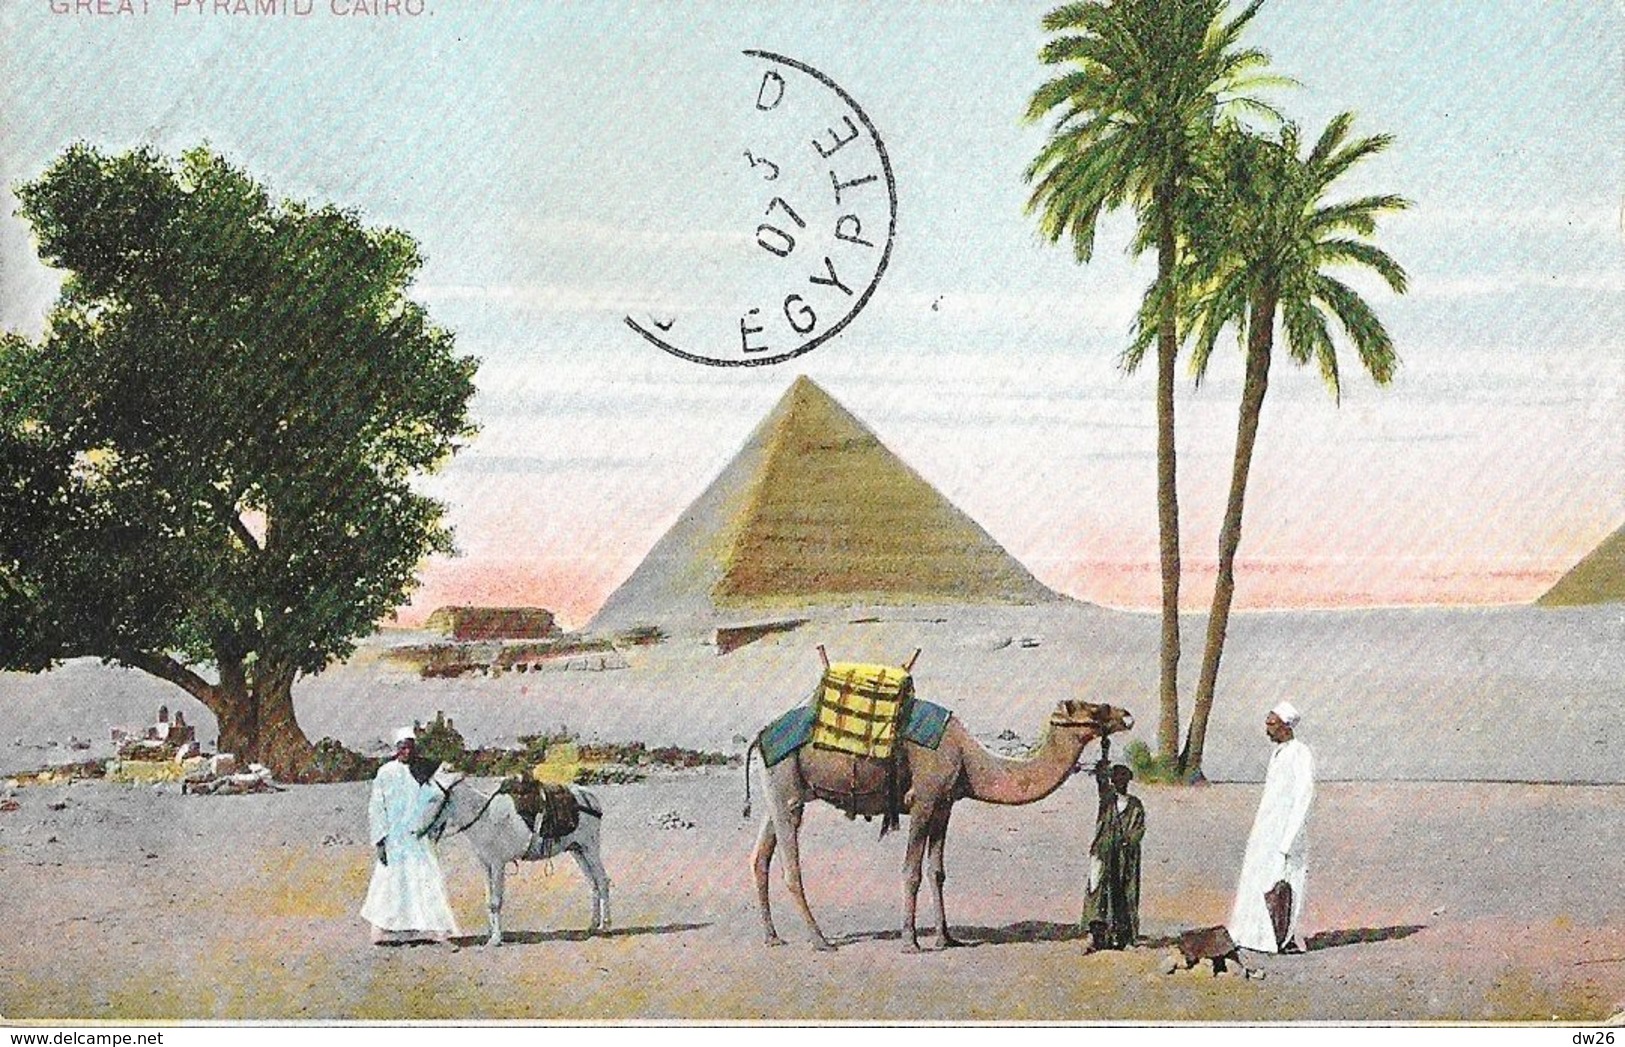 Le Caire, Les Pyramides (Great Pyramid, Cairo) - Th. E.L. Série 945 - Carte Non écrite - Kairo